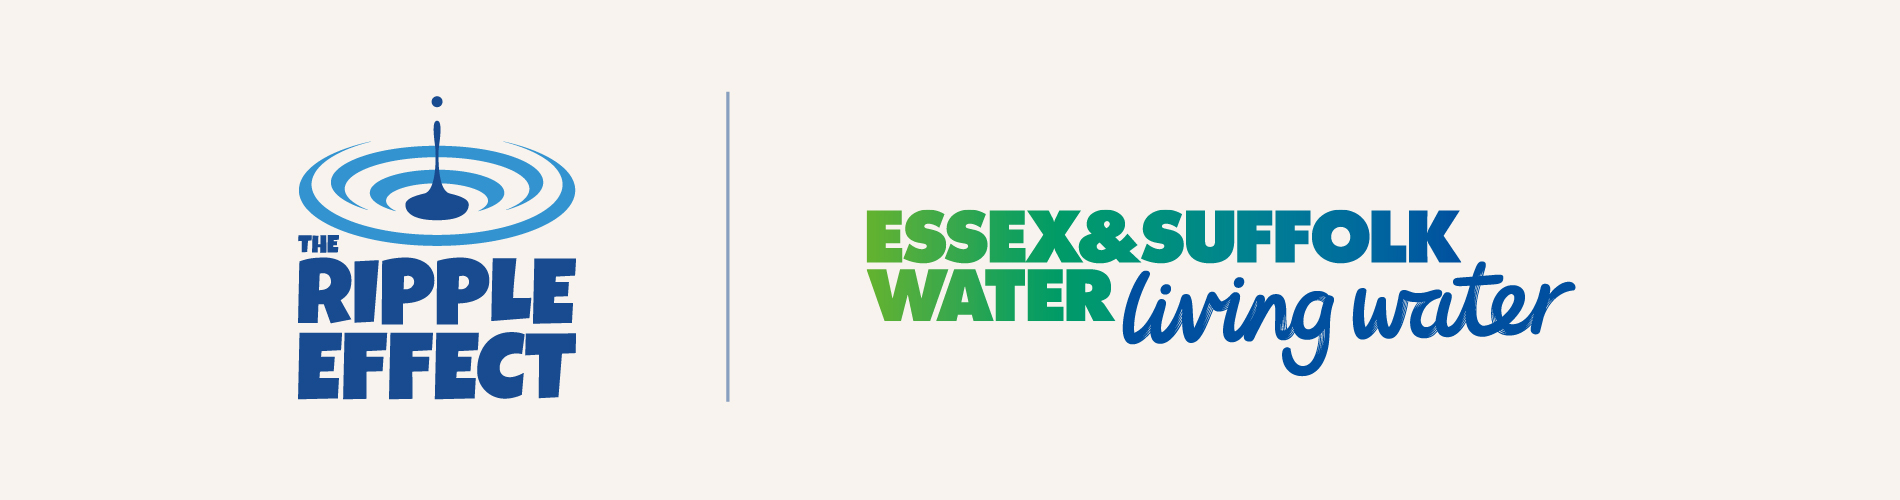 Essex & Suffolk Water: The Ripple Effect